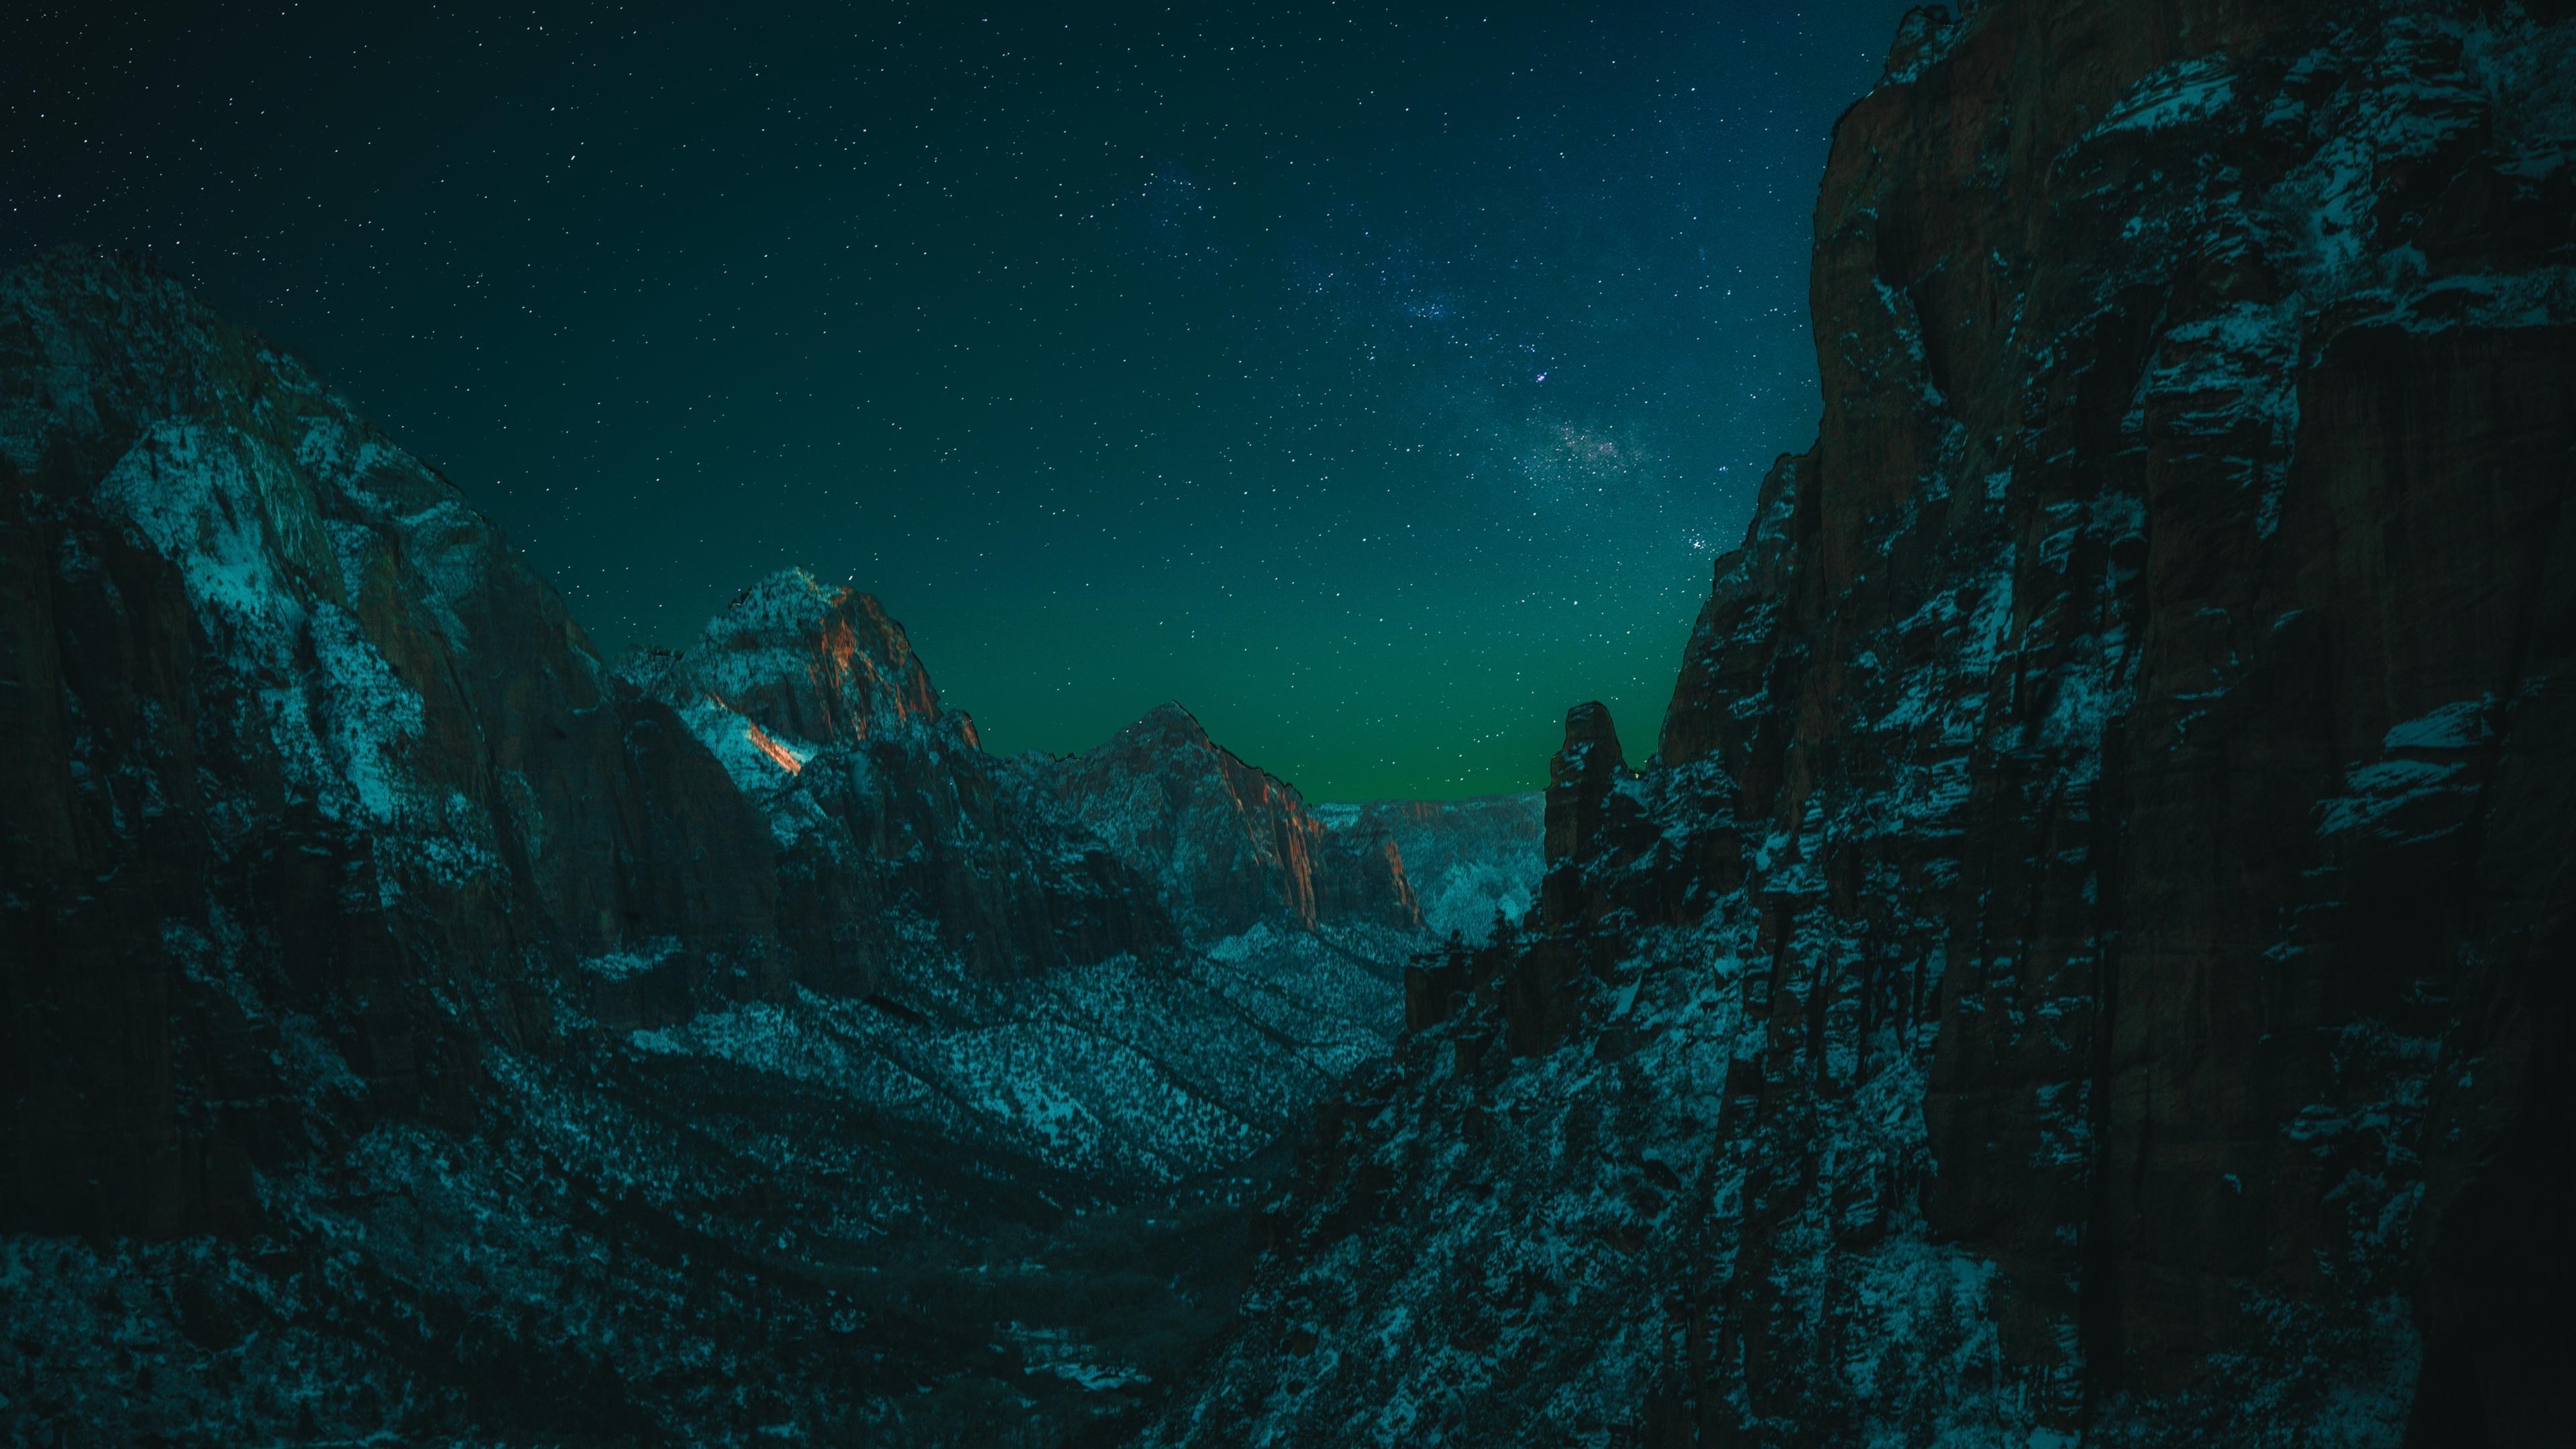 Landscape Forest Mountains in Night Sky 4K Wallpaper, HD